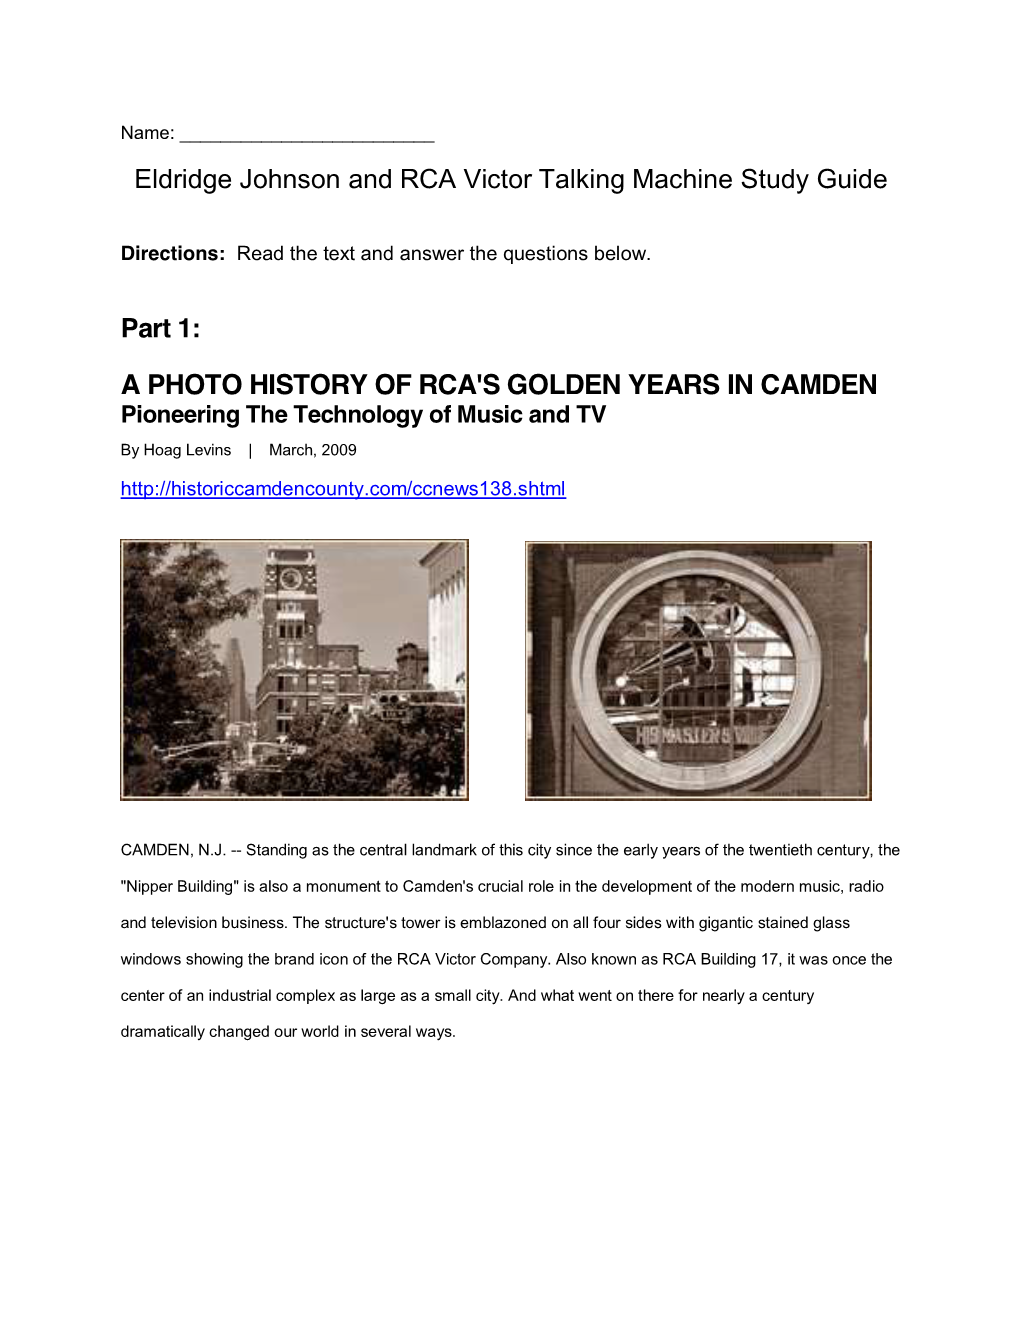 Eldridge Johnson and RCA Victor Talking Machine Study Guide Part 1